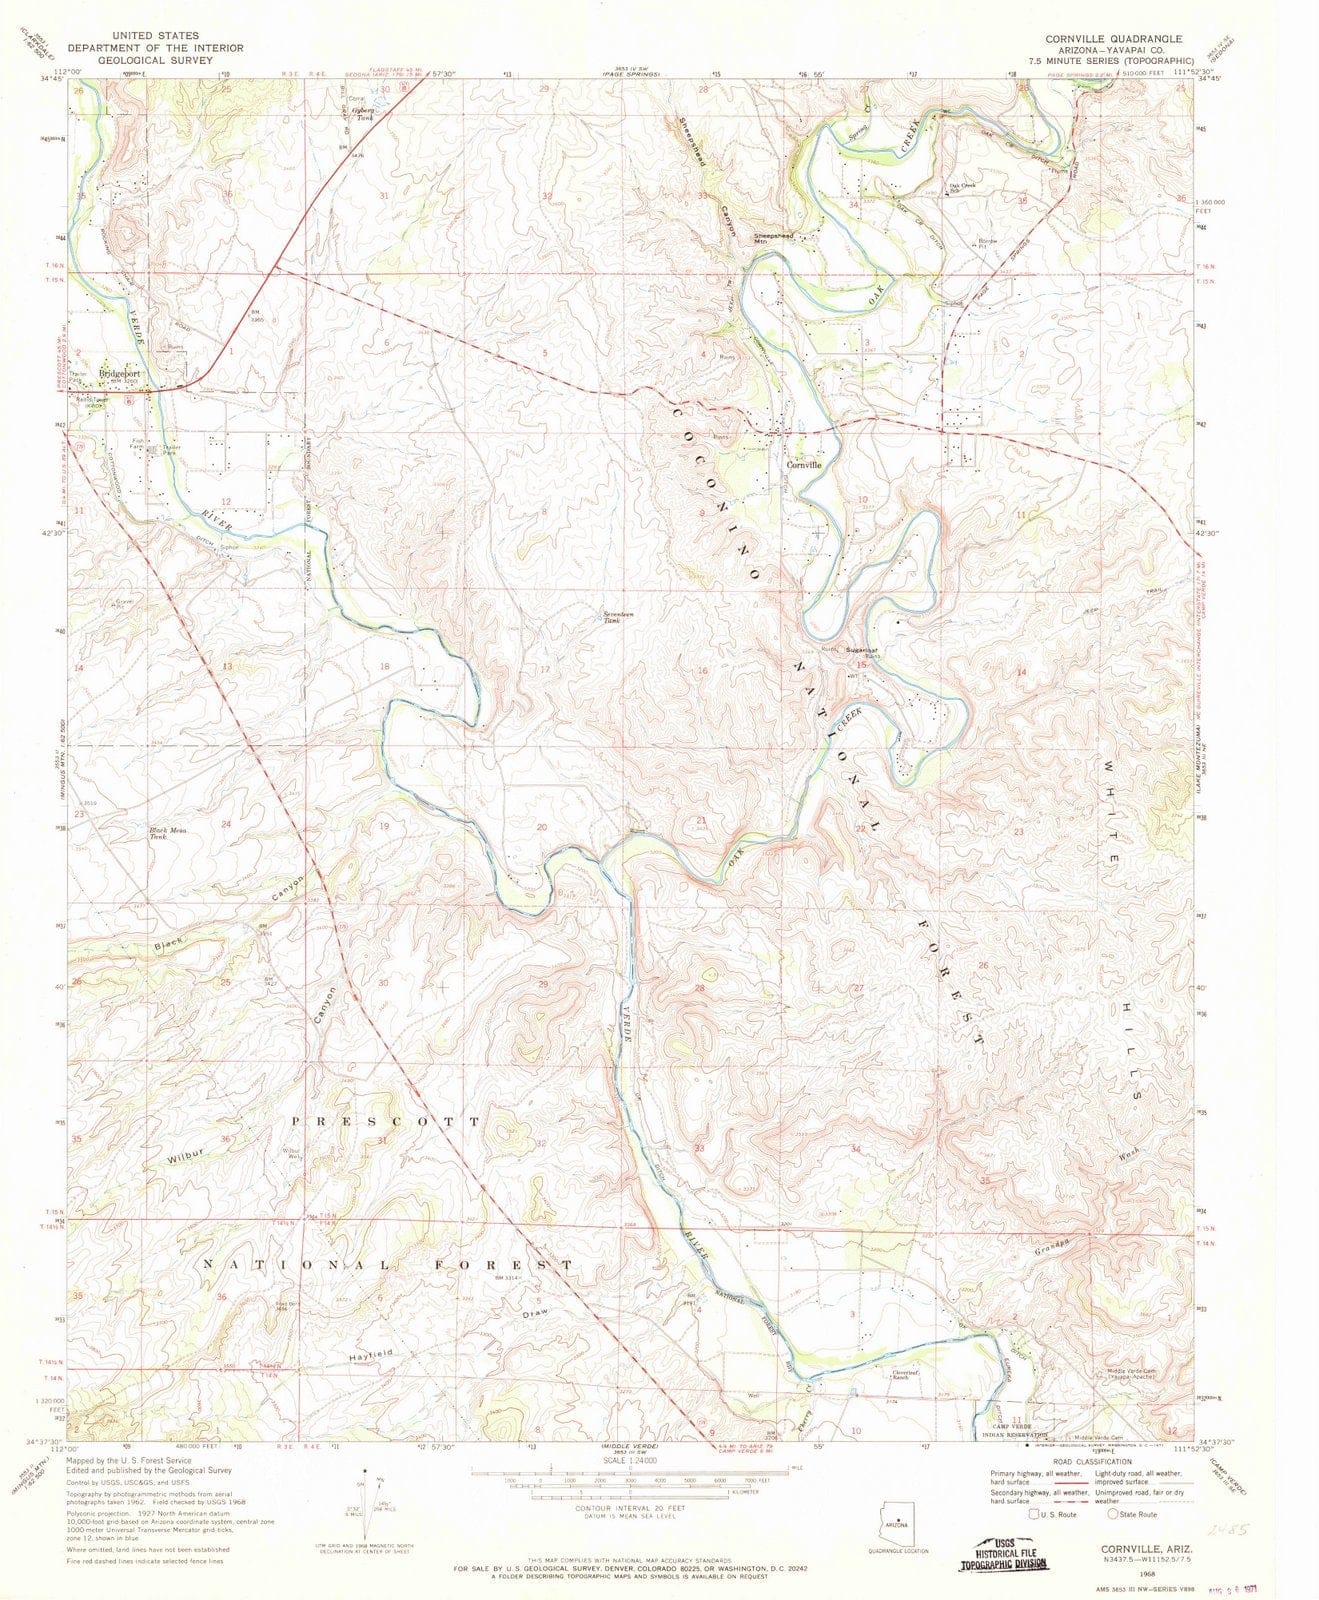 1968 Cornville, AZ - Arizona - USGS Topographic Map